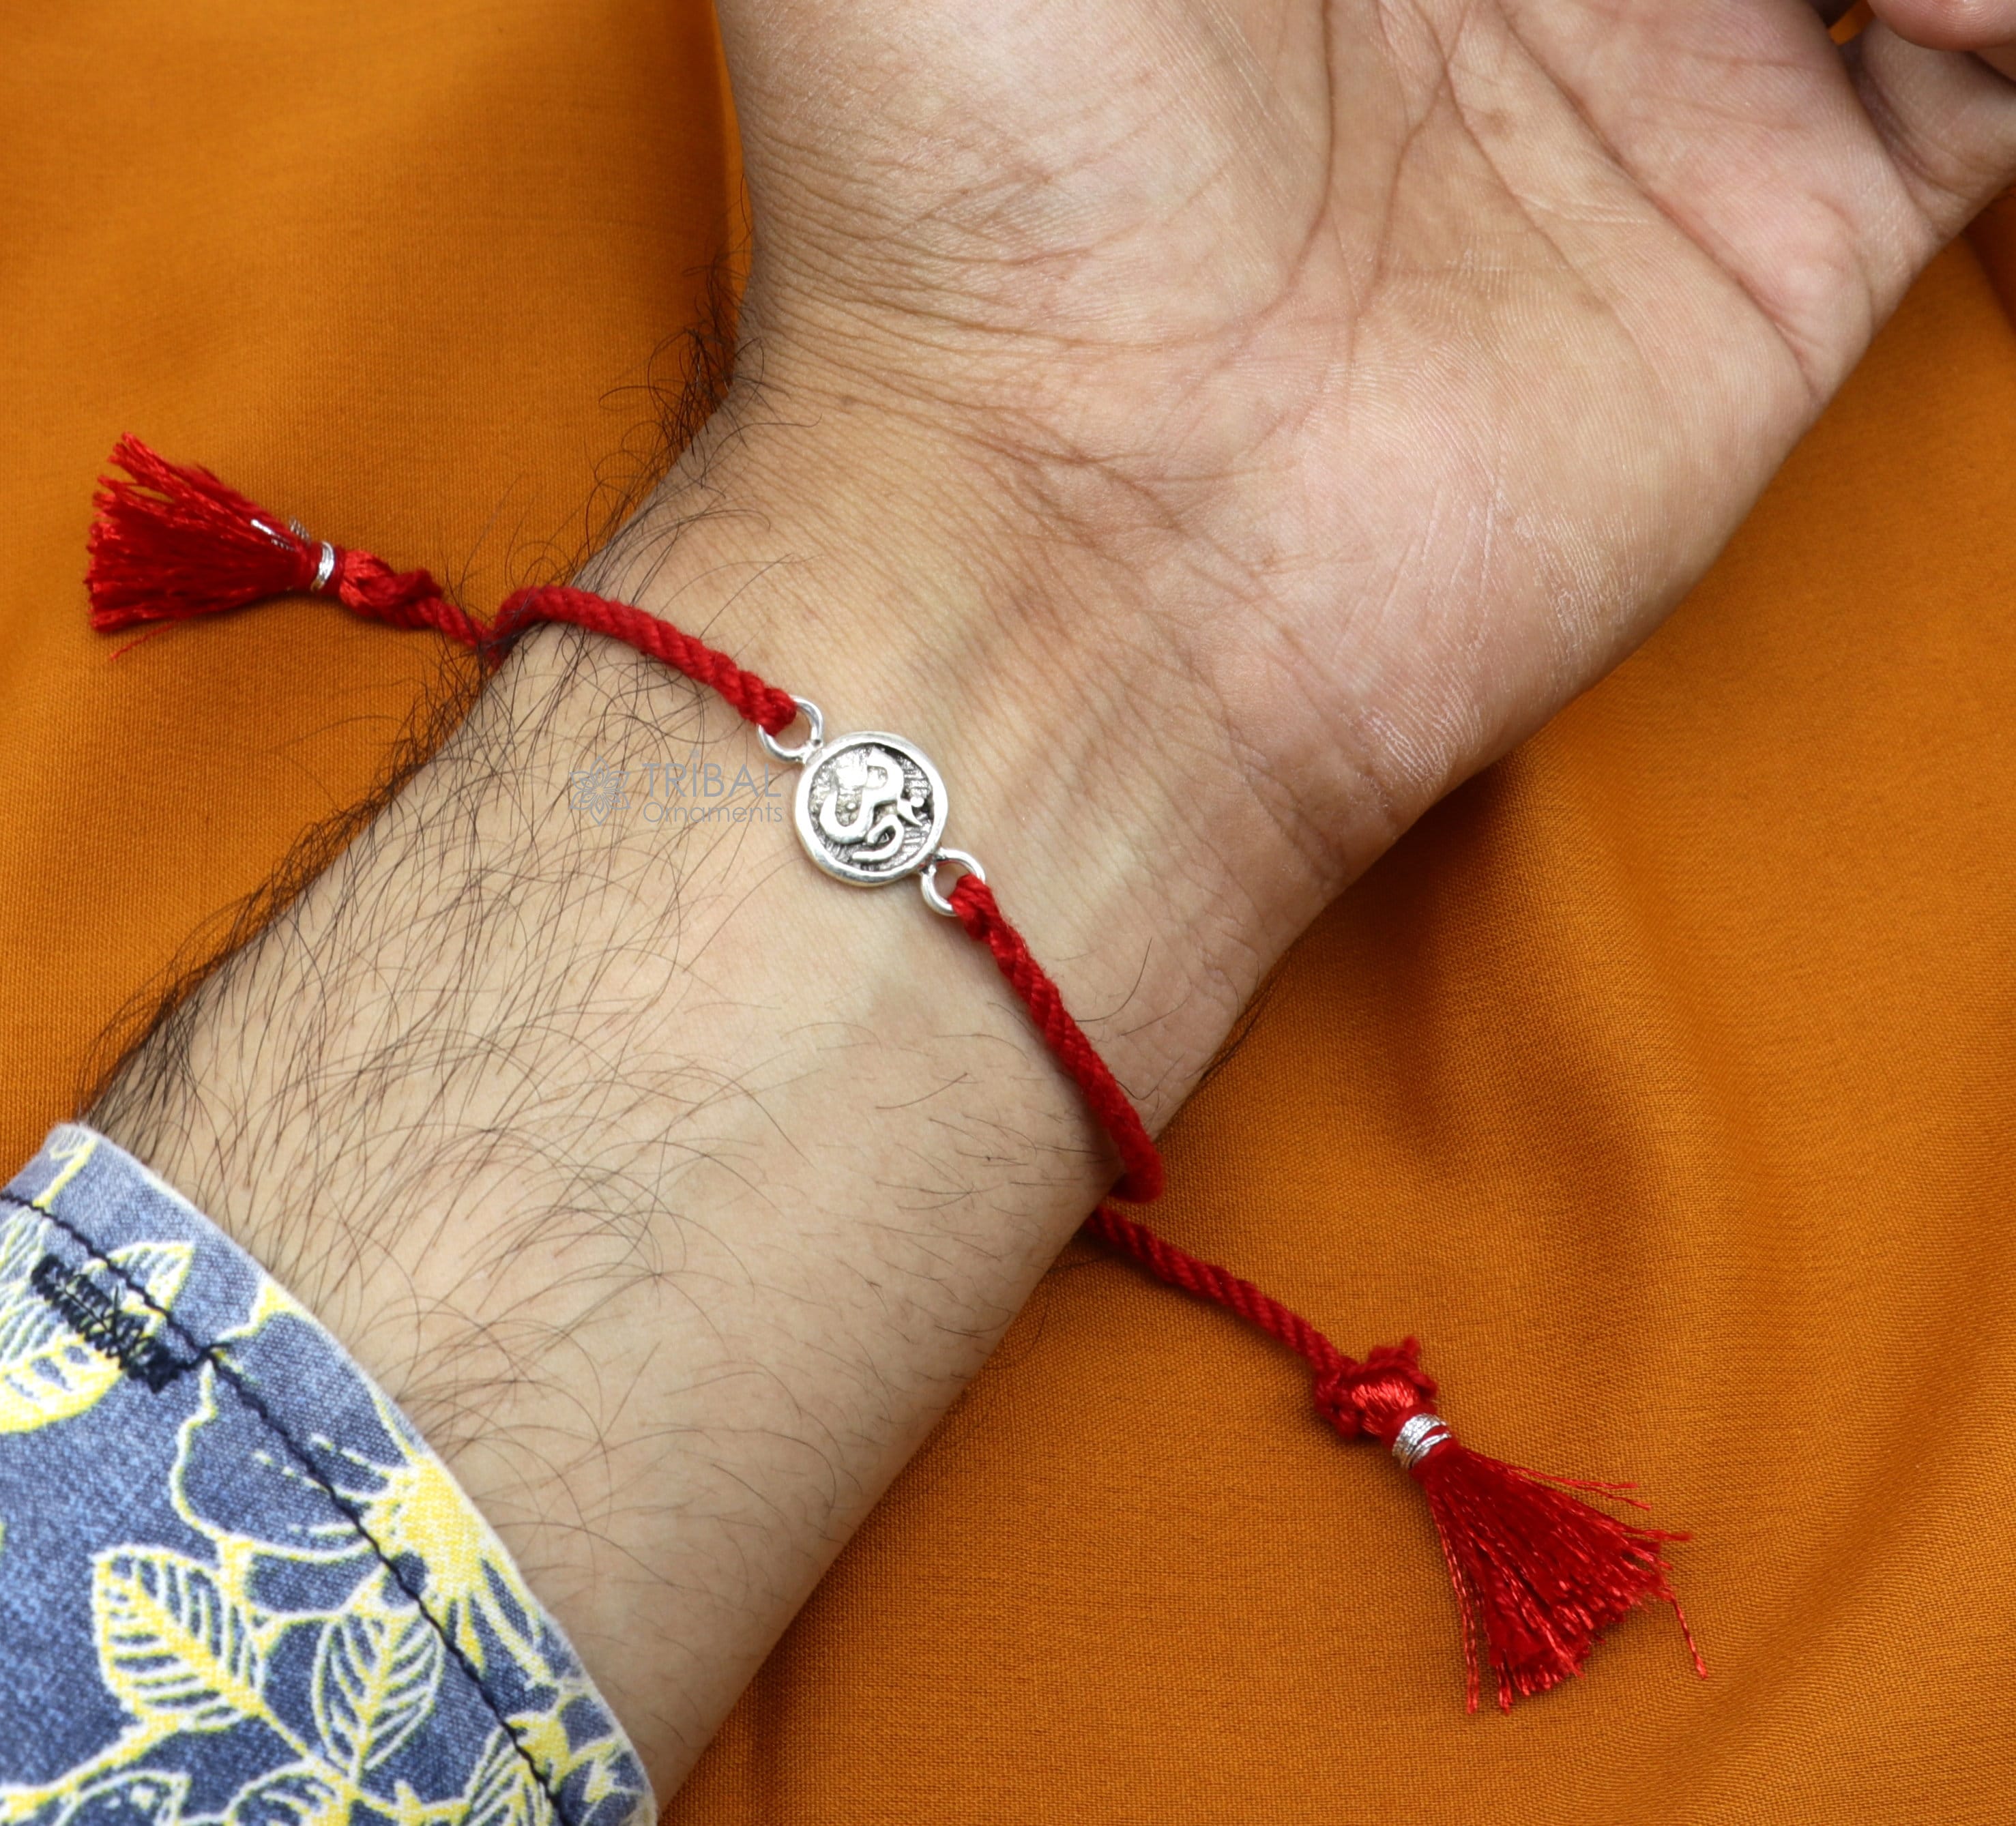 Buy AUMKAARA Ik onkar (God is One) Silver Symbol Gents Gift Bracelet  Religious Symbol_Sikh Symbol at Amazon.in